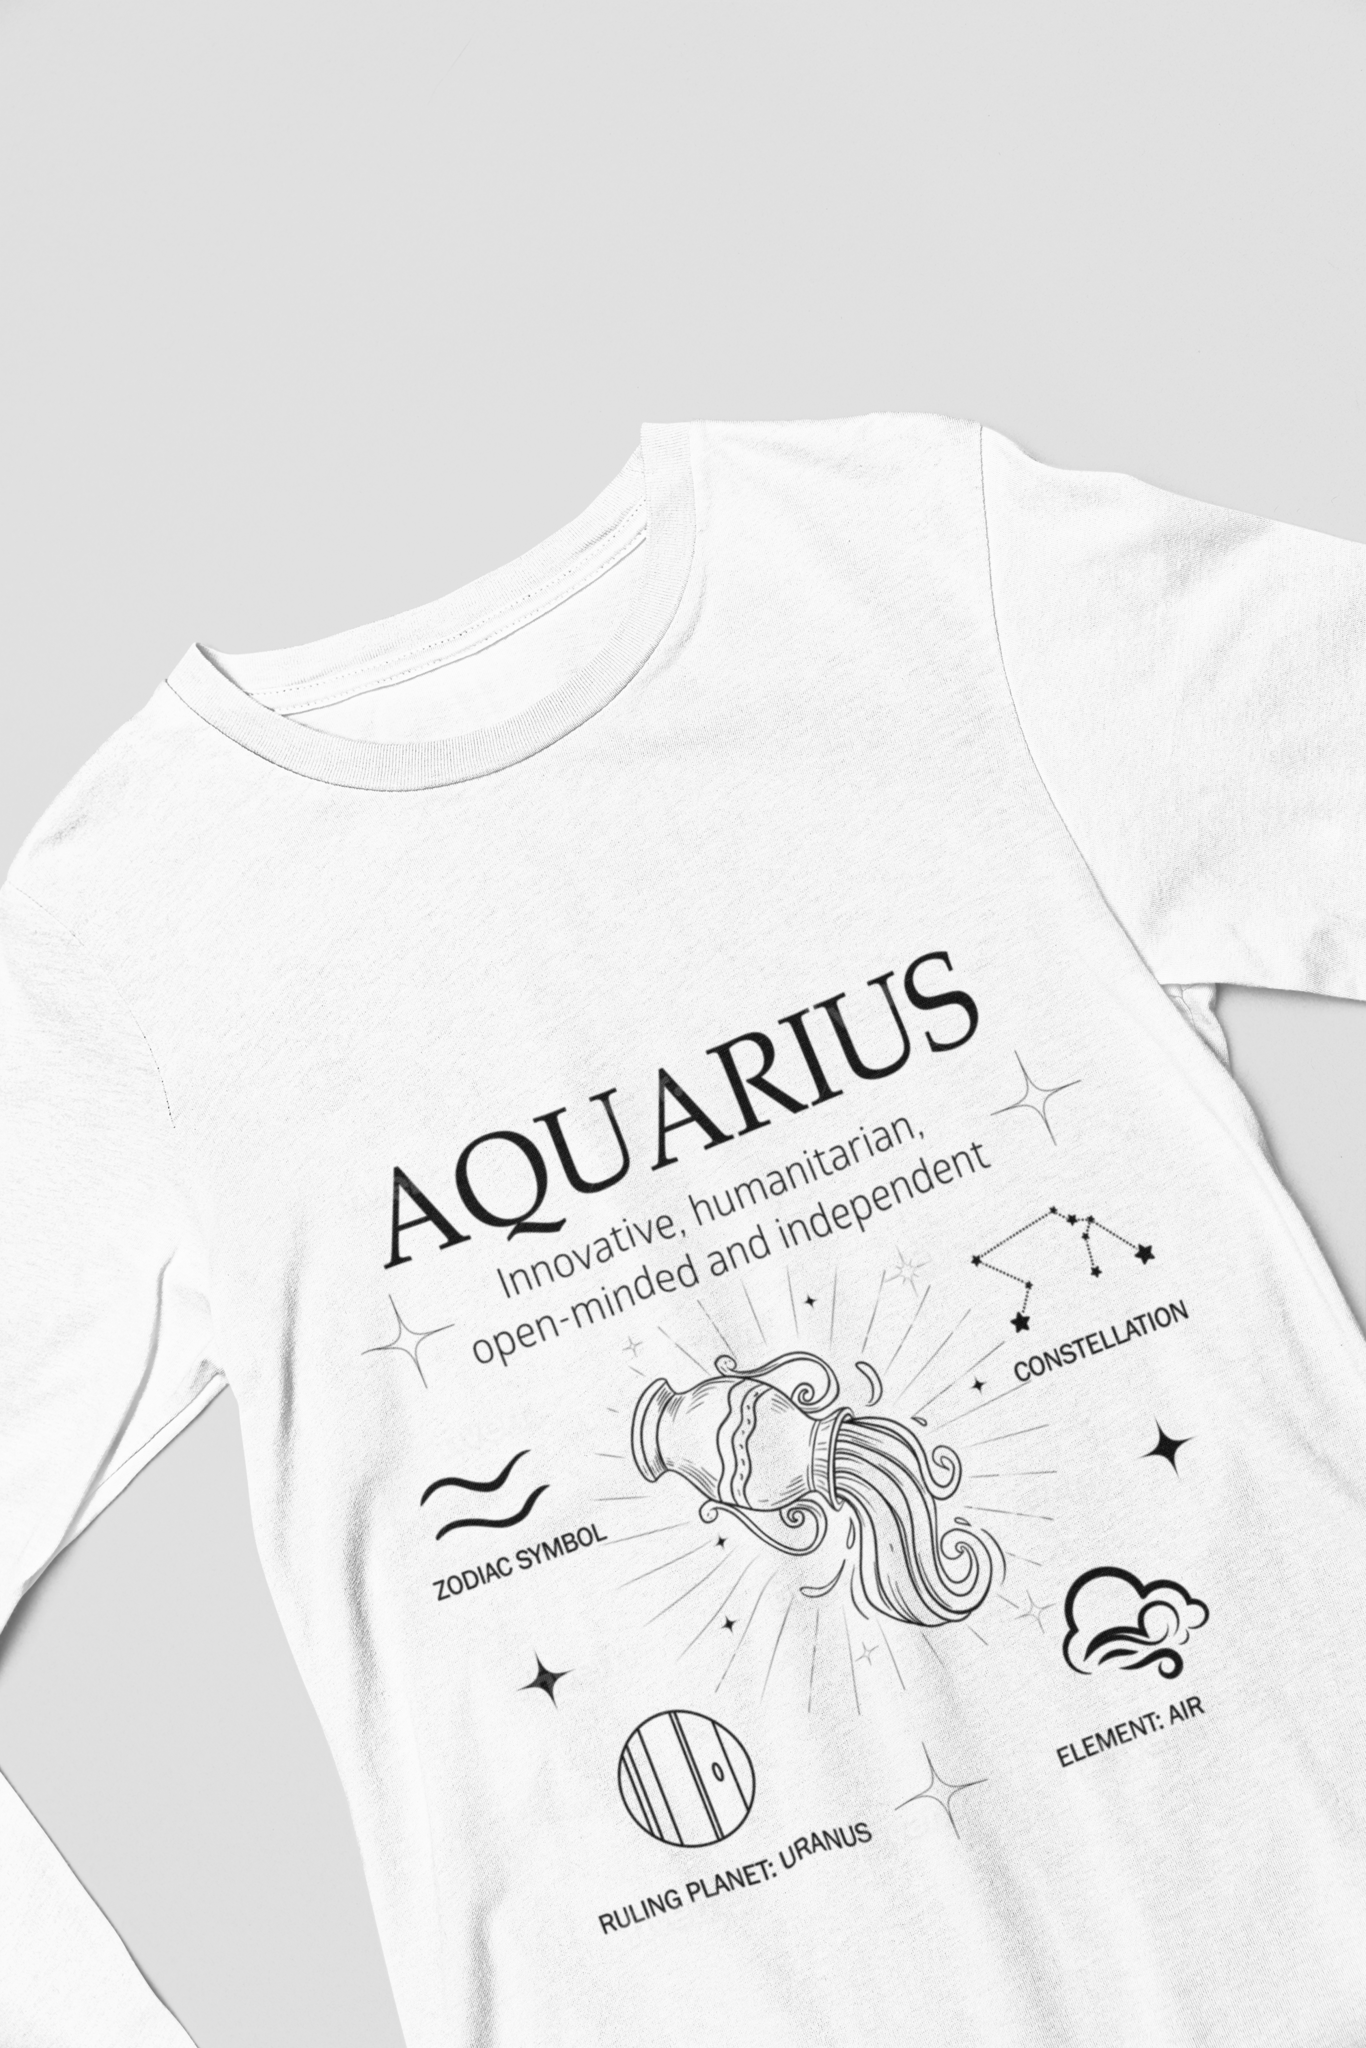 Men's Full Sleeve: White T-Shirt Aquarius